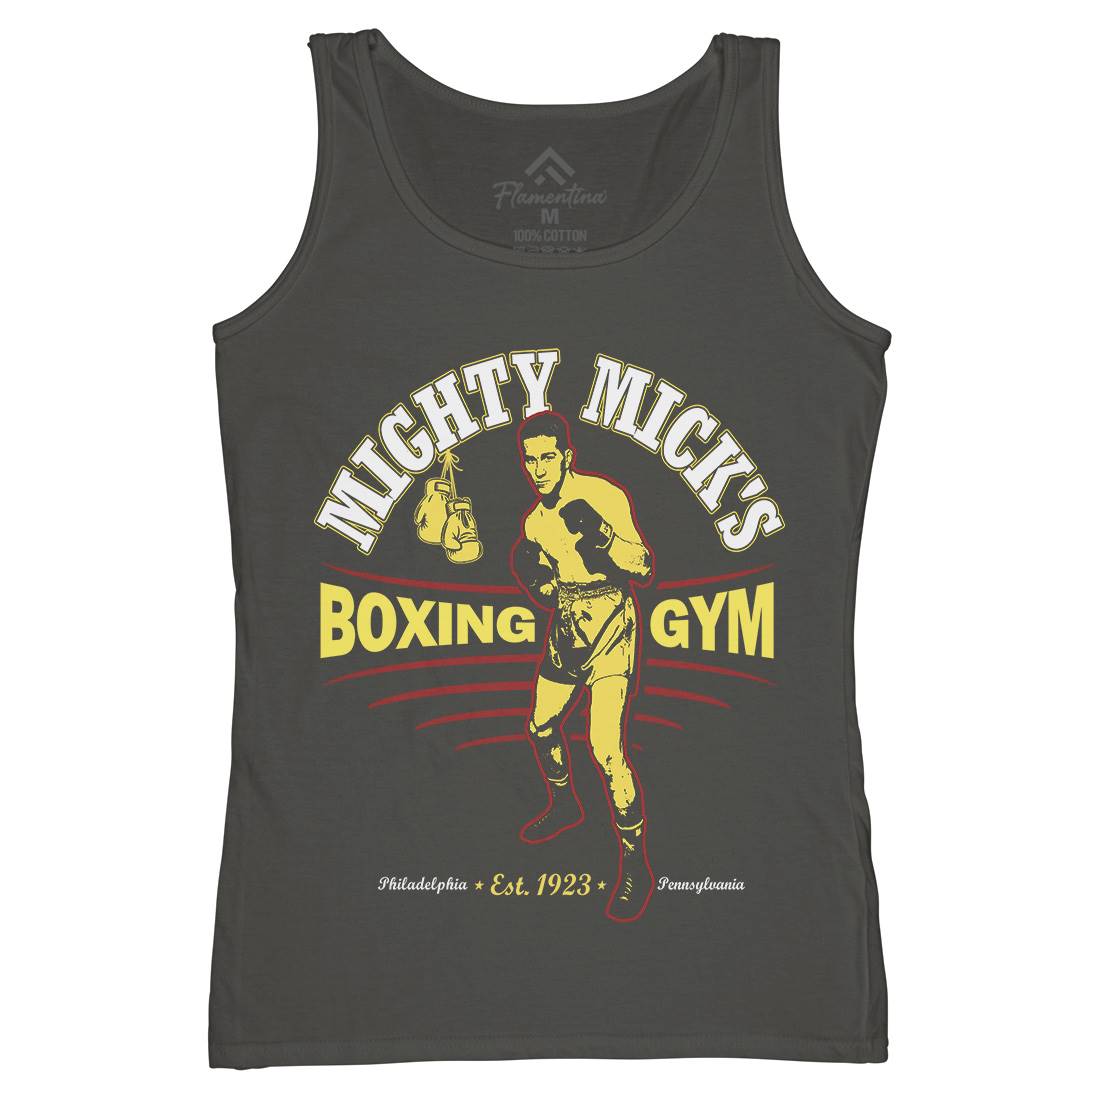 Mighty Micks Gym Womens Organic Tank Top Vest Sport D276